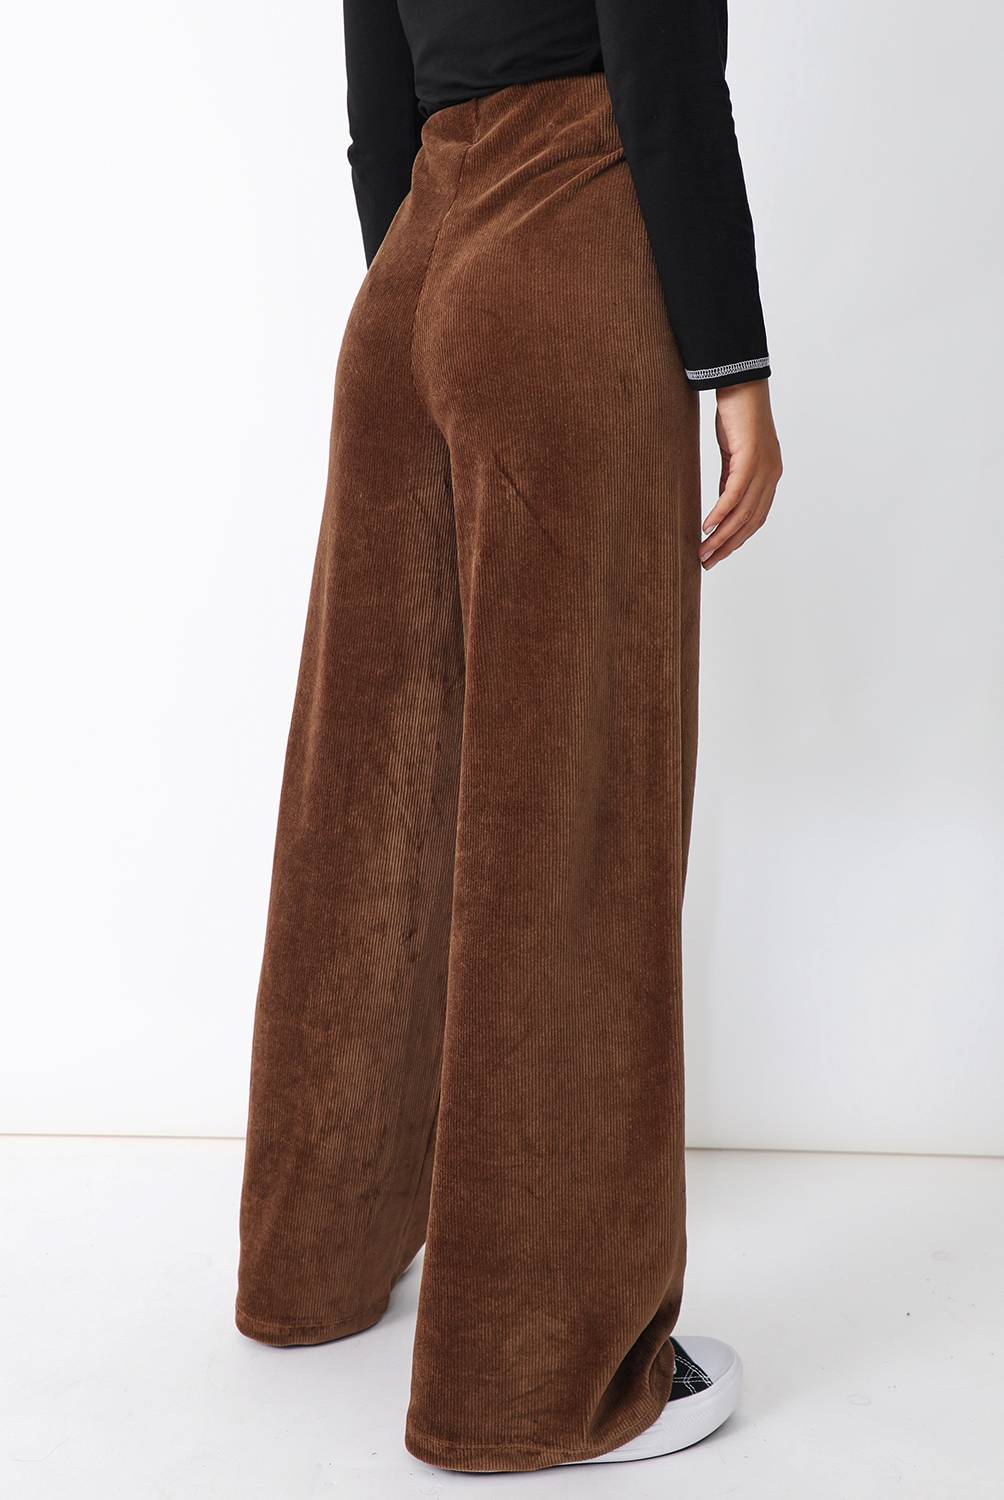 MOSSIMO - Pantalón Elastico Mujer Mossimo